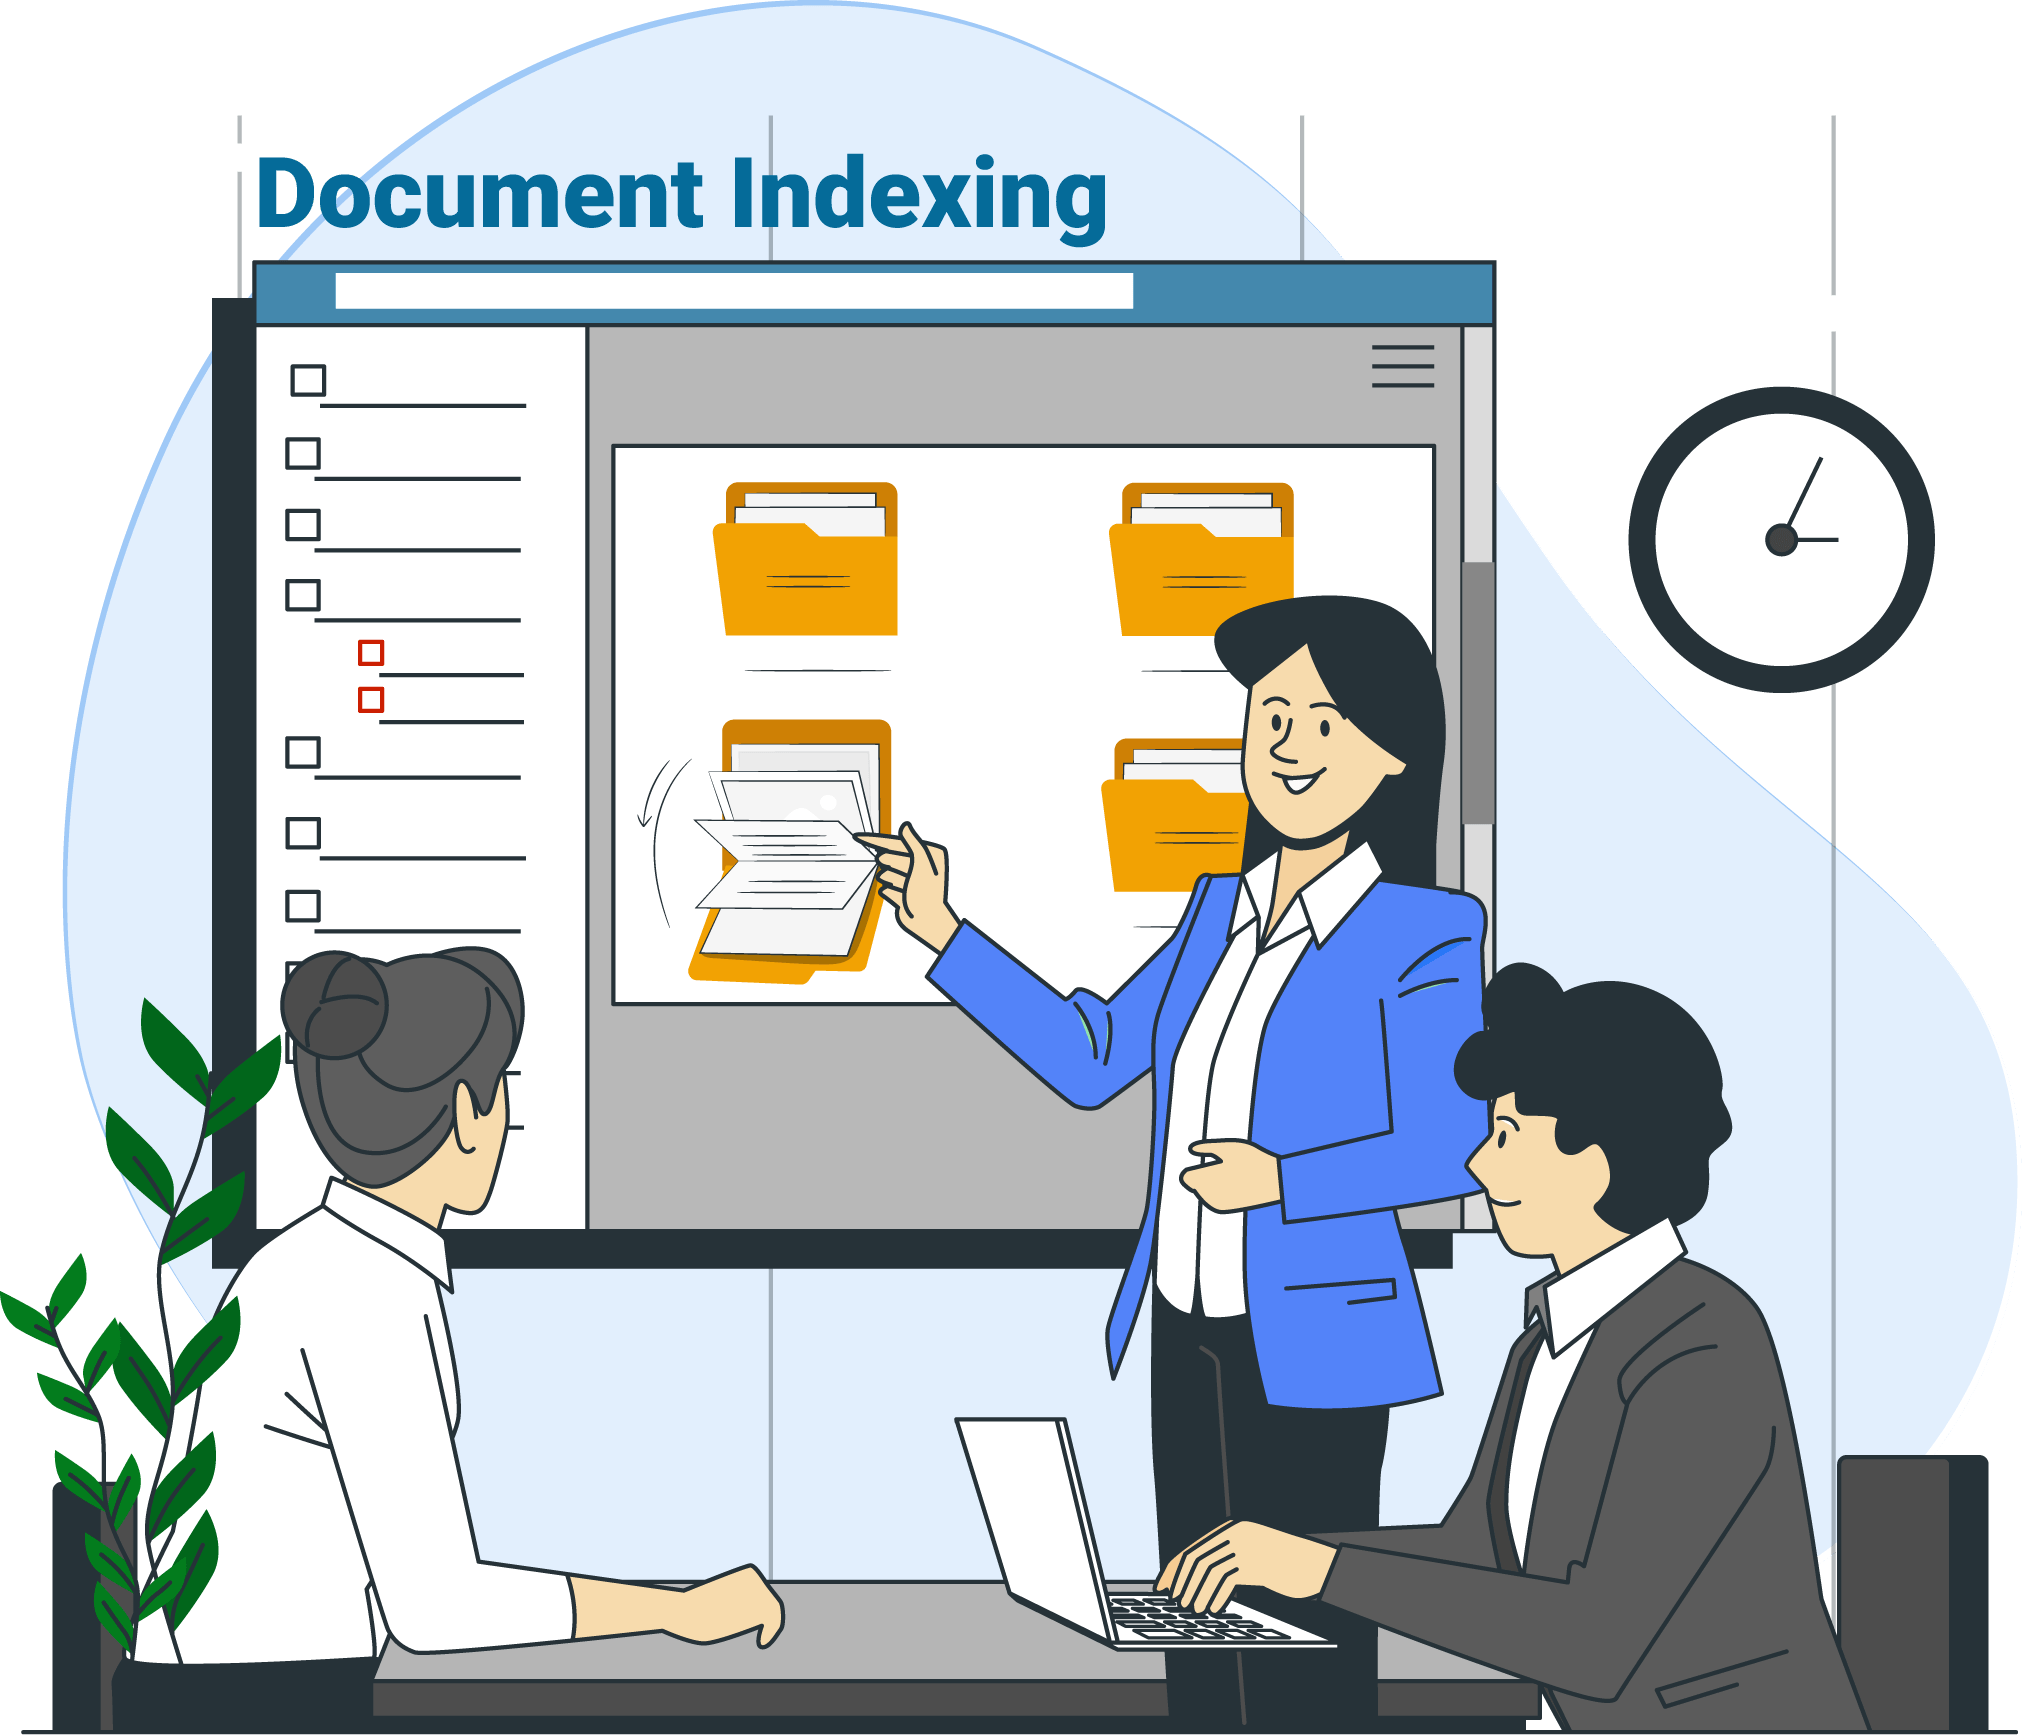 Document Indexing